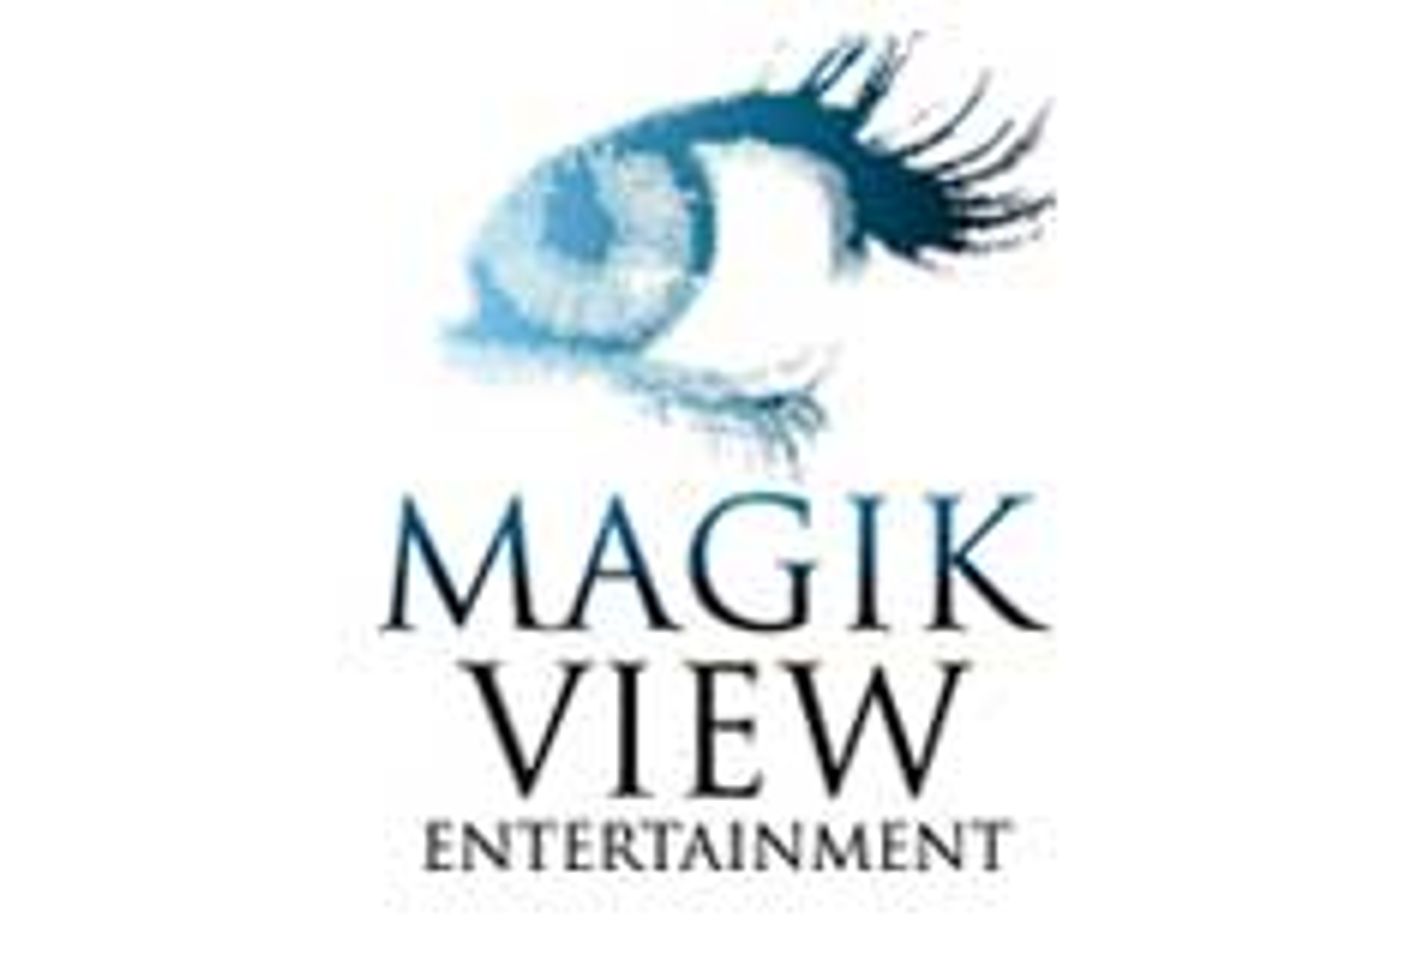 Private's Content Provider, Magik View Entertainment, Wins 4 Venus Awards